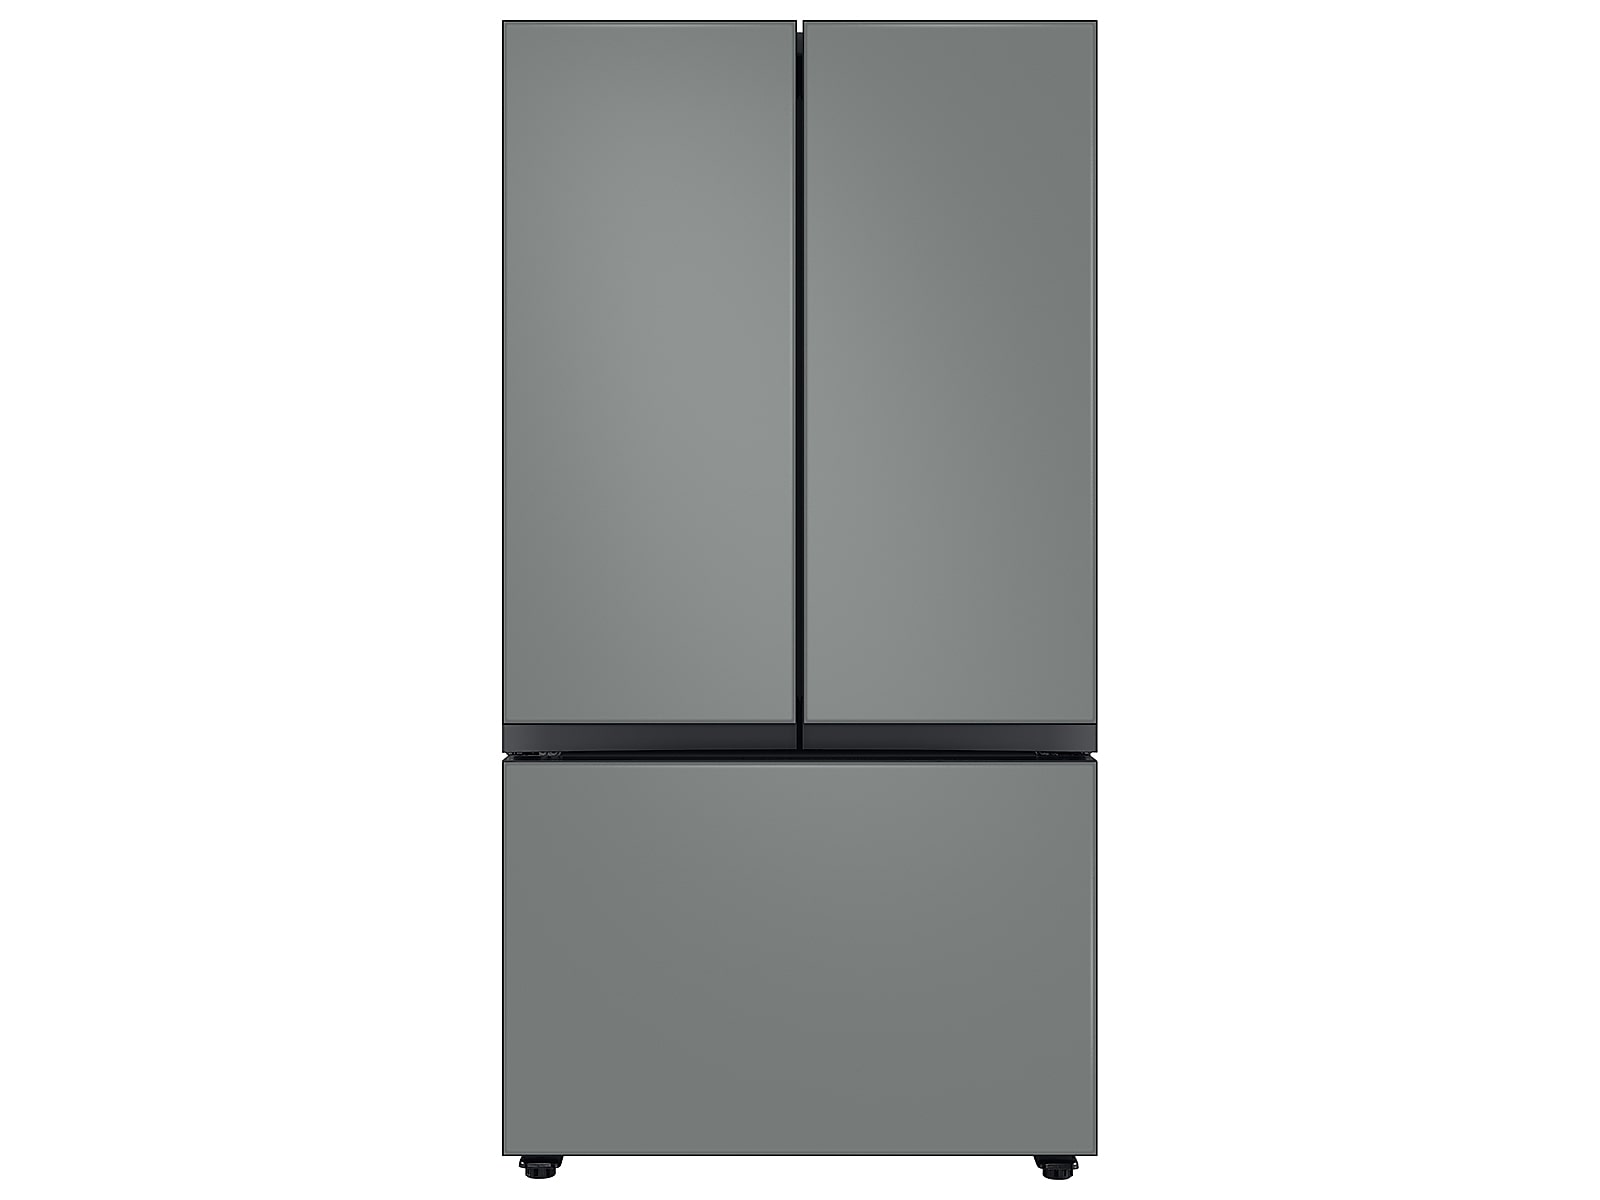 Samsung Bespoke 3-Door French Door Refrigerator (24 cu. ft.) with AutoFill Water Pitcher in Grey Glass(BNDL-1650465175673)